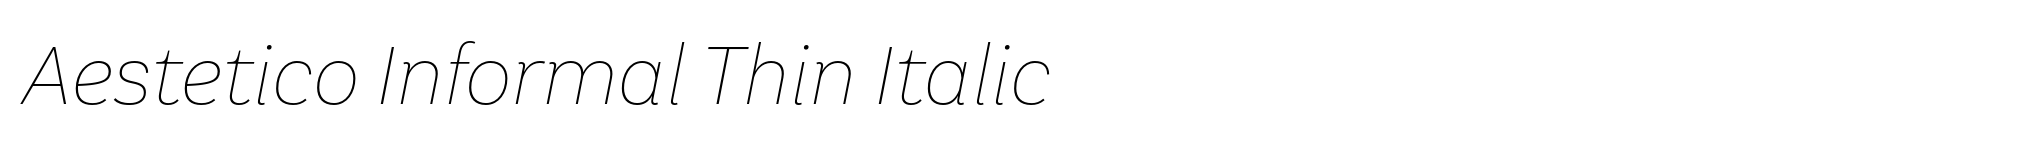 Aestetico Informal Thin Italic image